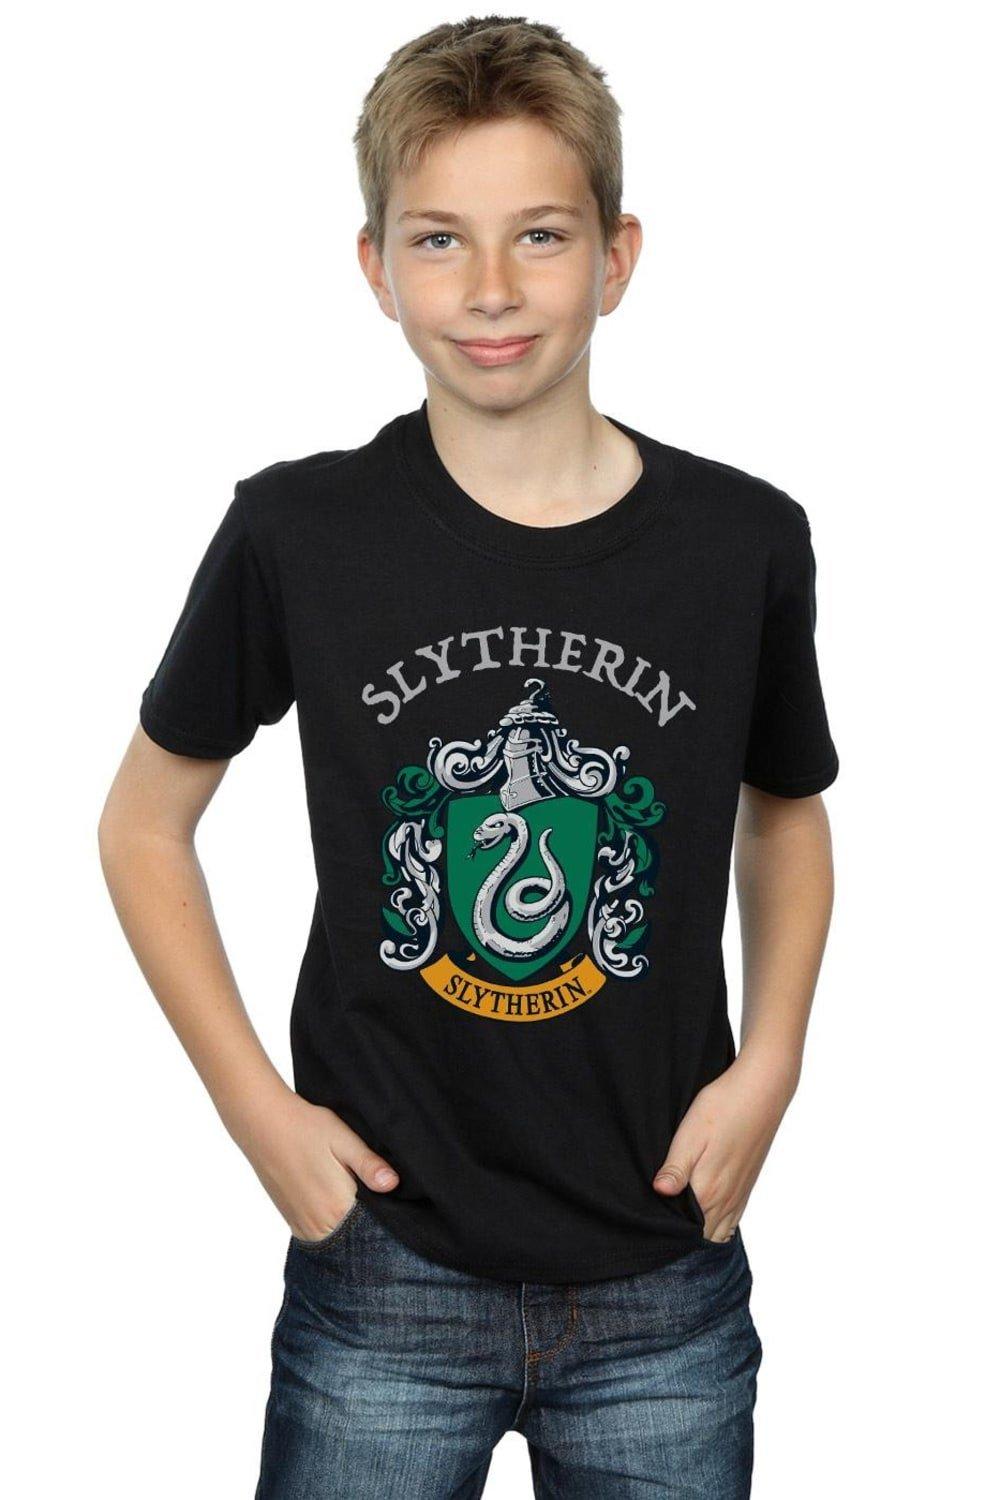 Slytherin Crest T-Shirt